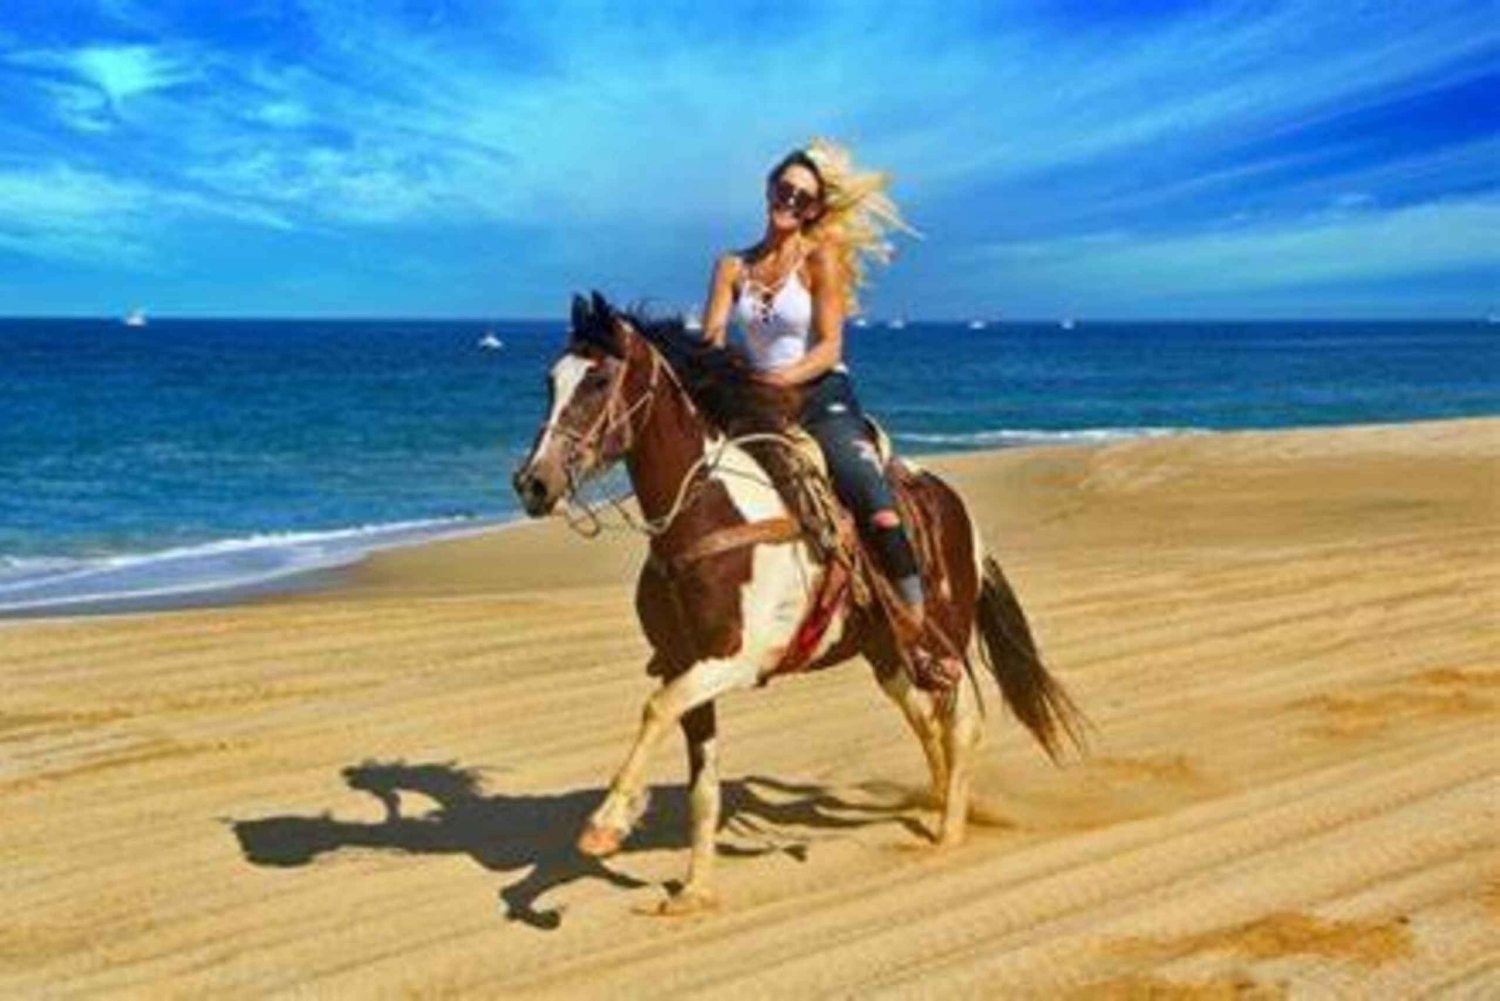 Horseback riding in Boavista